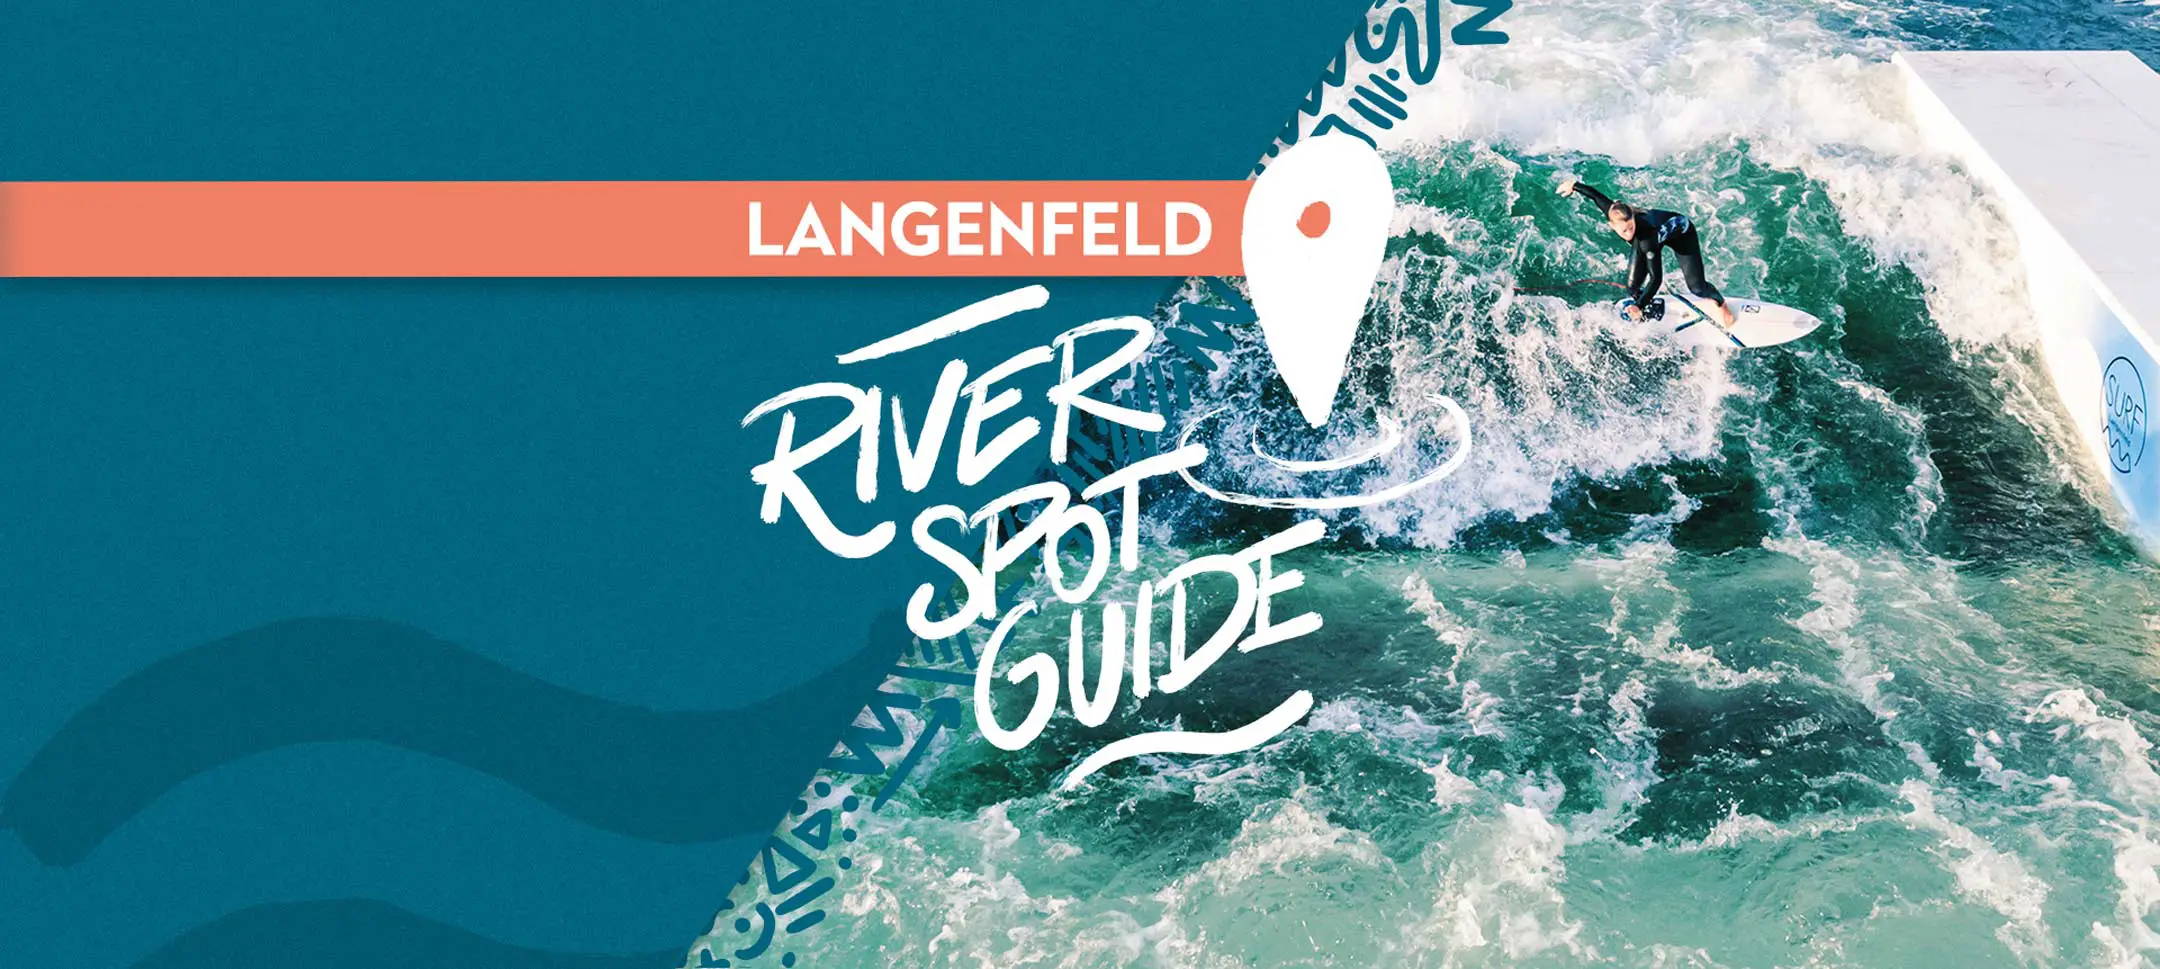 River Spot Guide for Surf Langenfeld, Unit Parktech